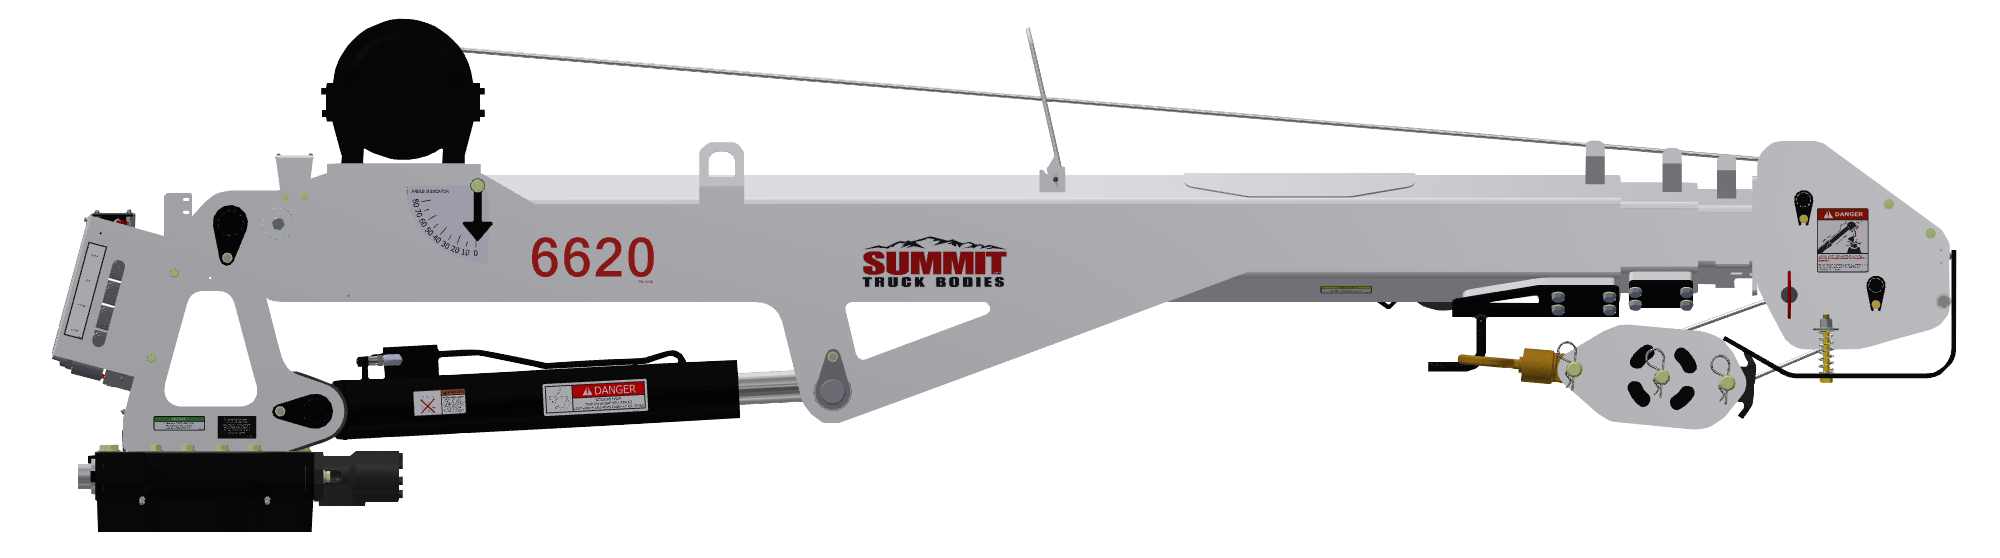 Summit 6620 Crane Rendering